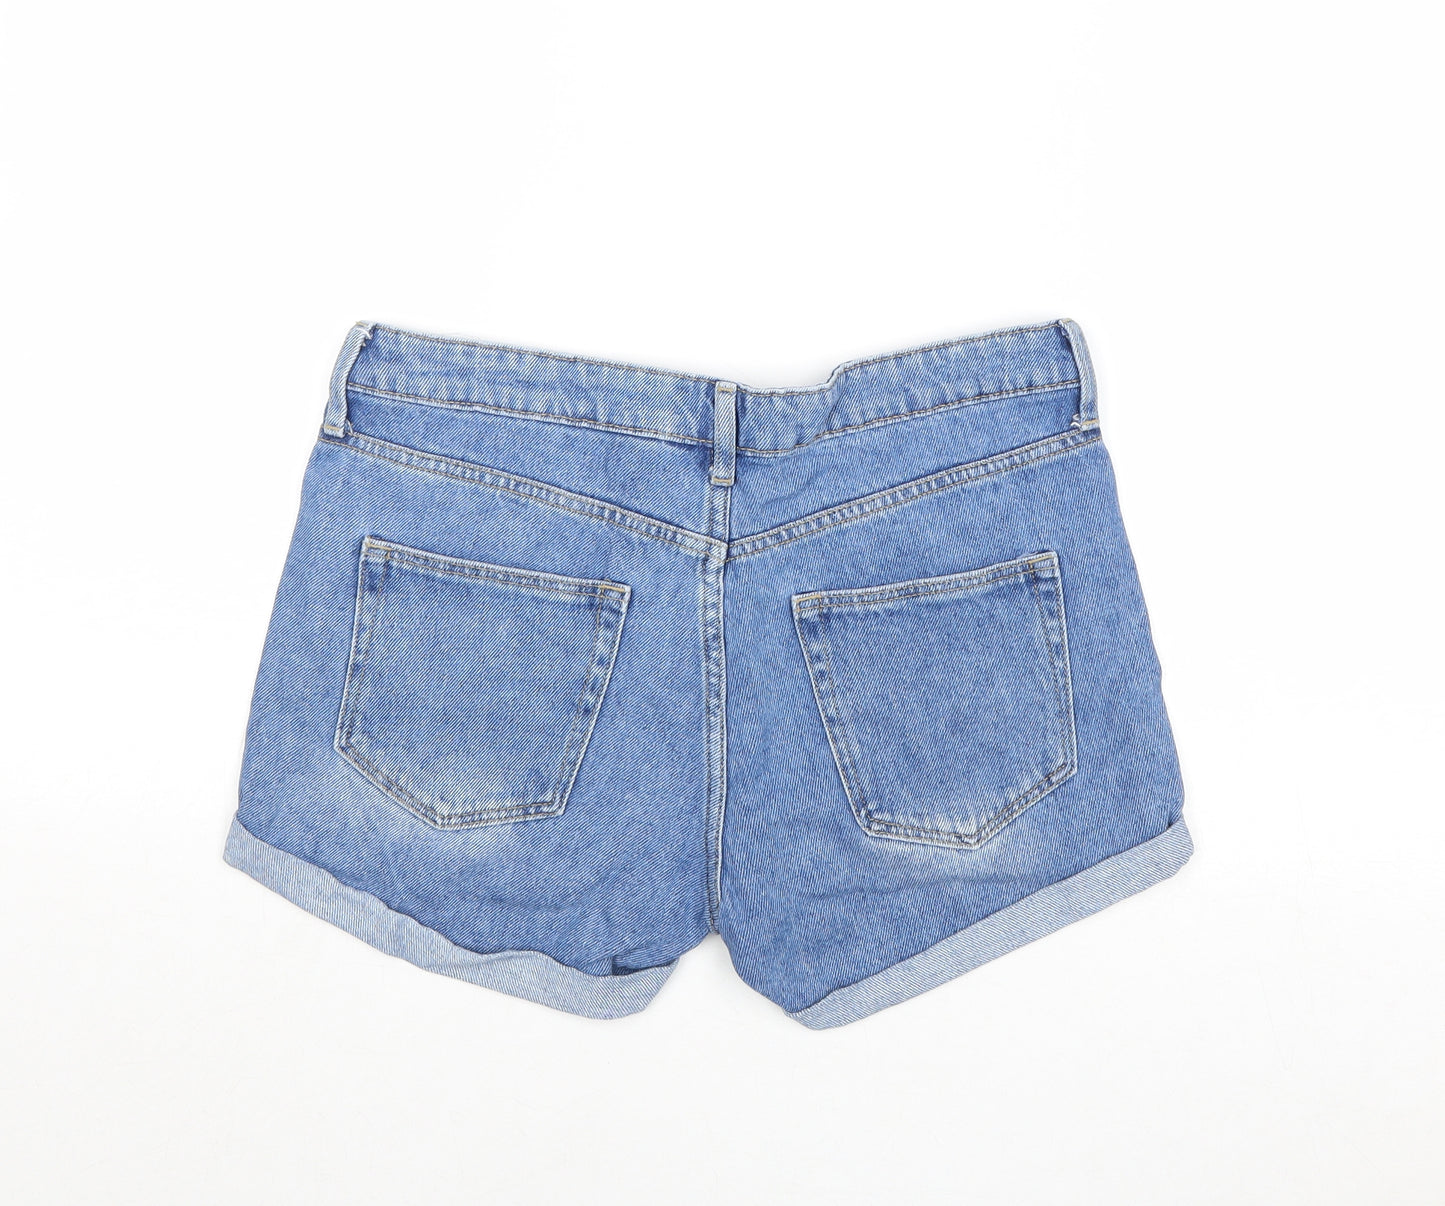 H&M Womens Blue Cotton Hot Pants Shorts Size 8 Regular Zip